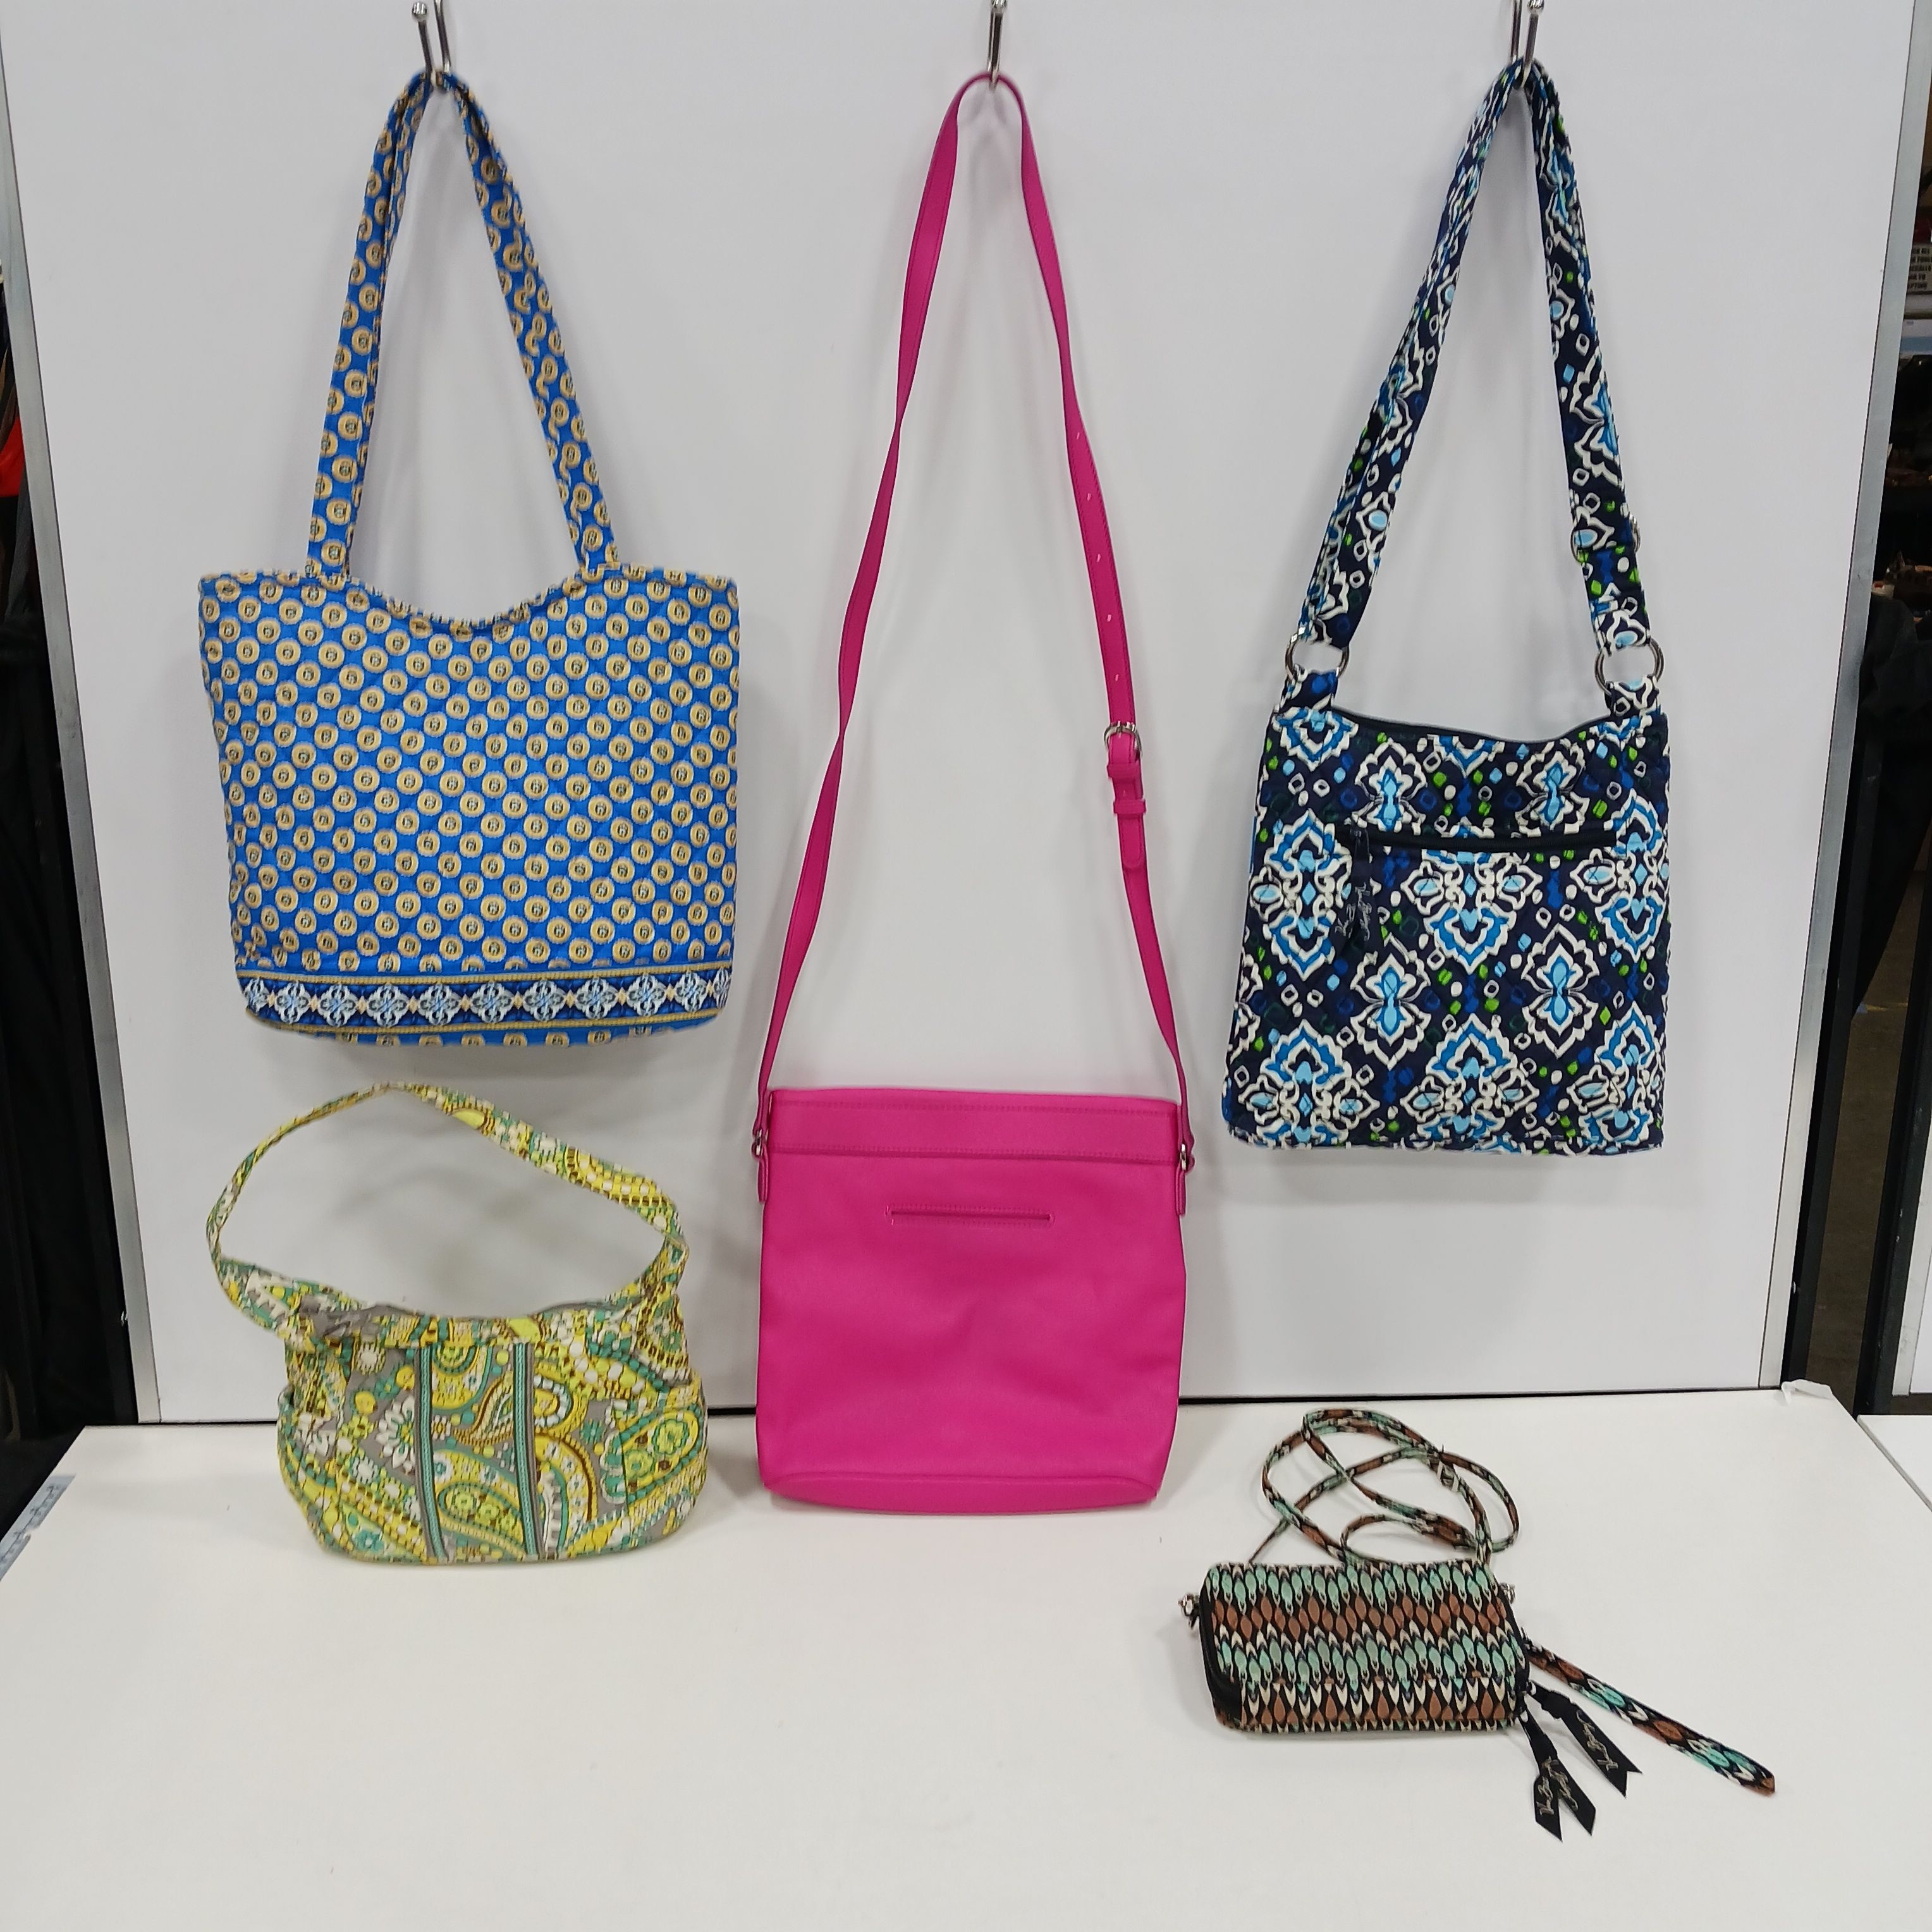 Vera Bradley purse - Bags and purses